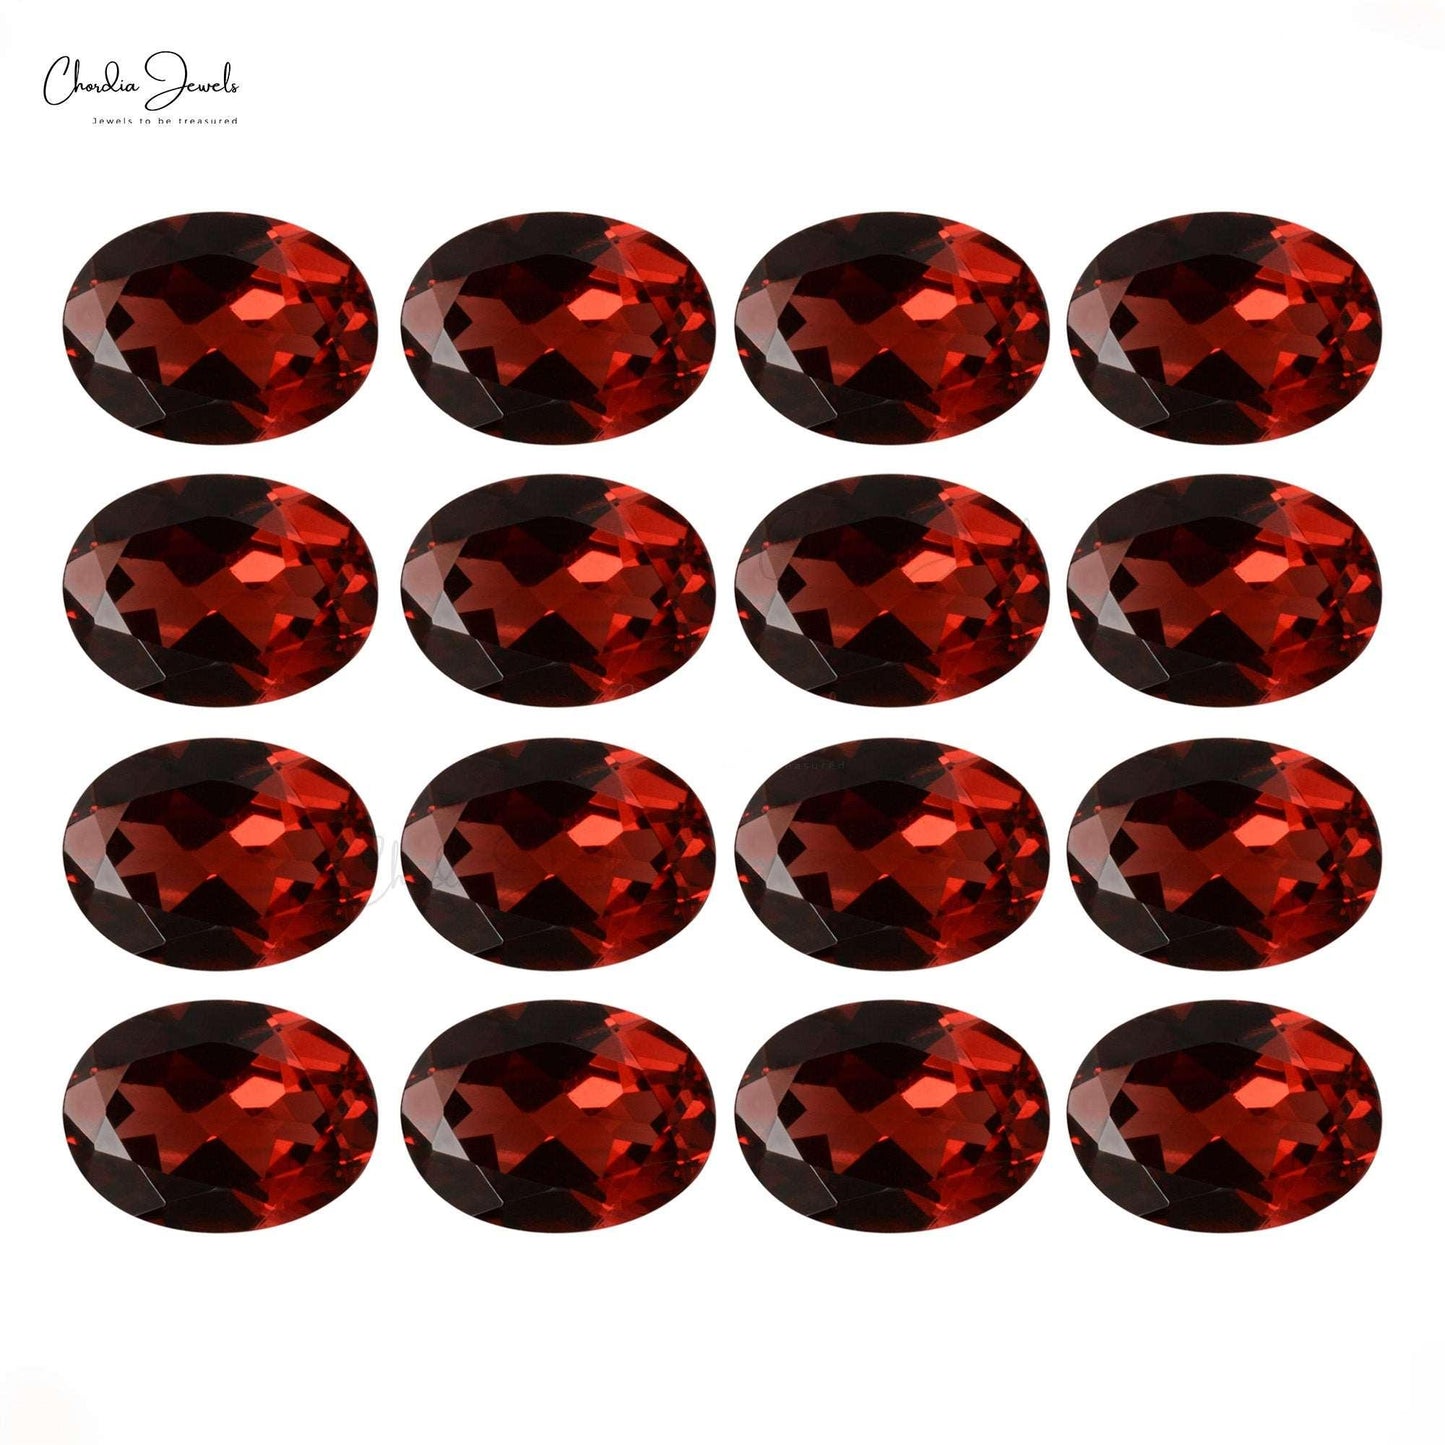 1 Carat AAA Quality Red Garnet Oval Cut Gemstone for Jewelry, 1 Piece - Chordia Jewels